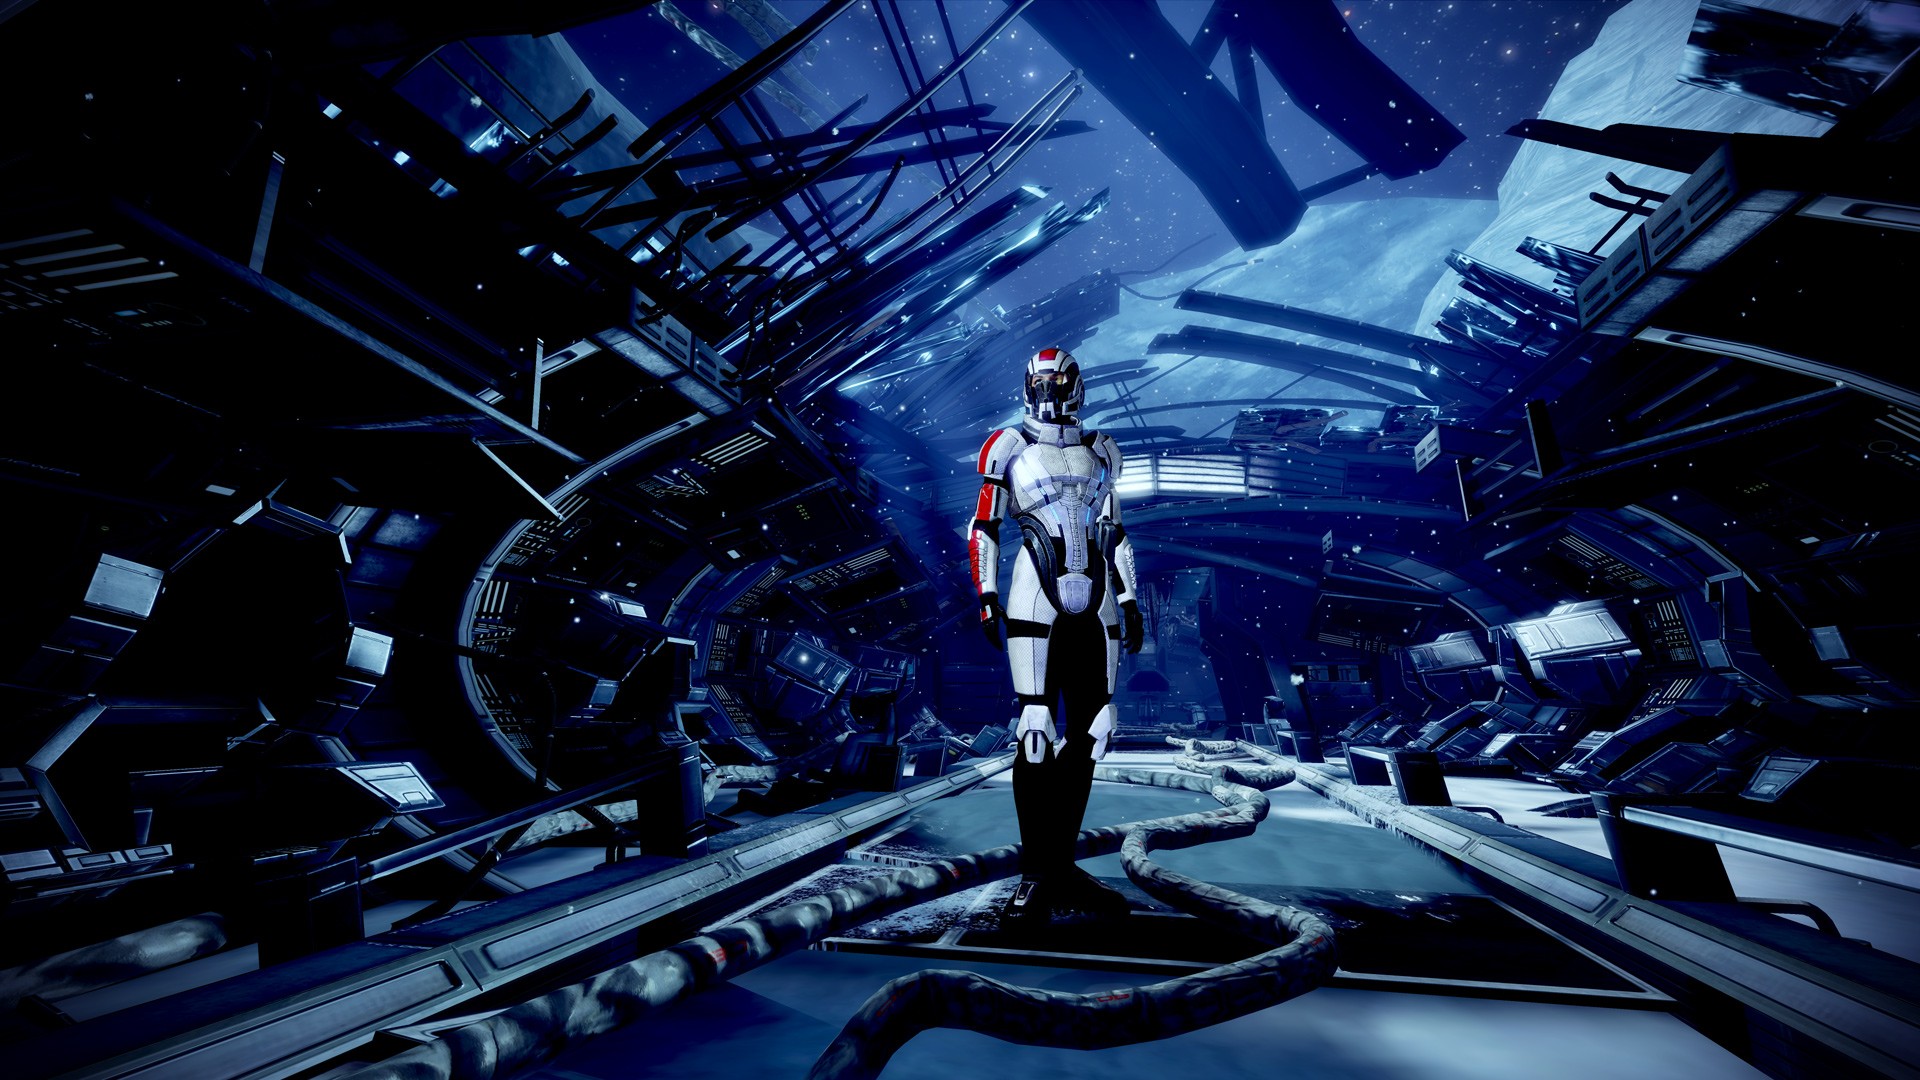 Handy-Wallpaper Mass Effect 2, Mass Effect, Computerspiele kostenlos herunterladen.